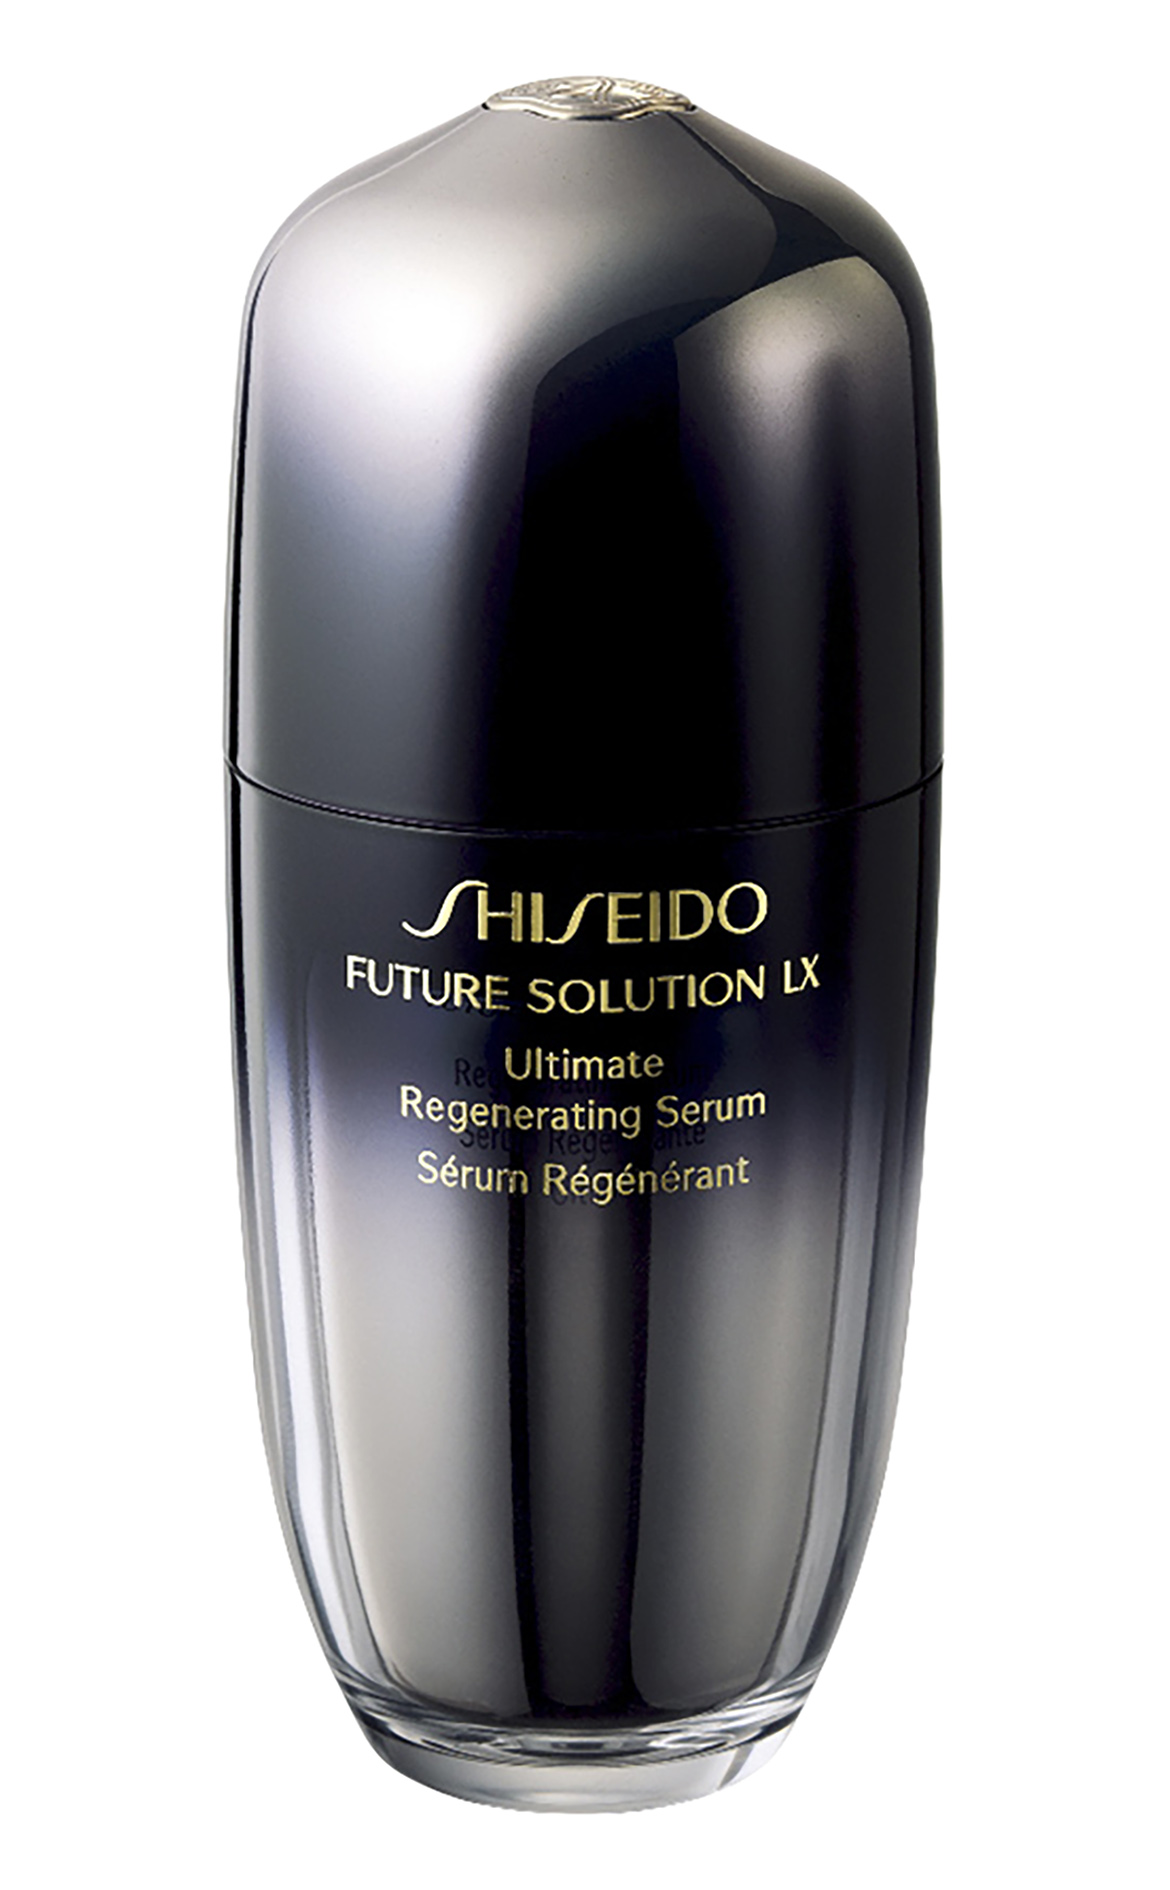 Shiseido serum. Shiseido Future solution LX Serum. Future solution LX Shiseido сыворотка. Shiseido Future solution Serum. Shiseido Future solution LX Ultimate Serum.